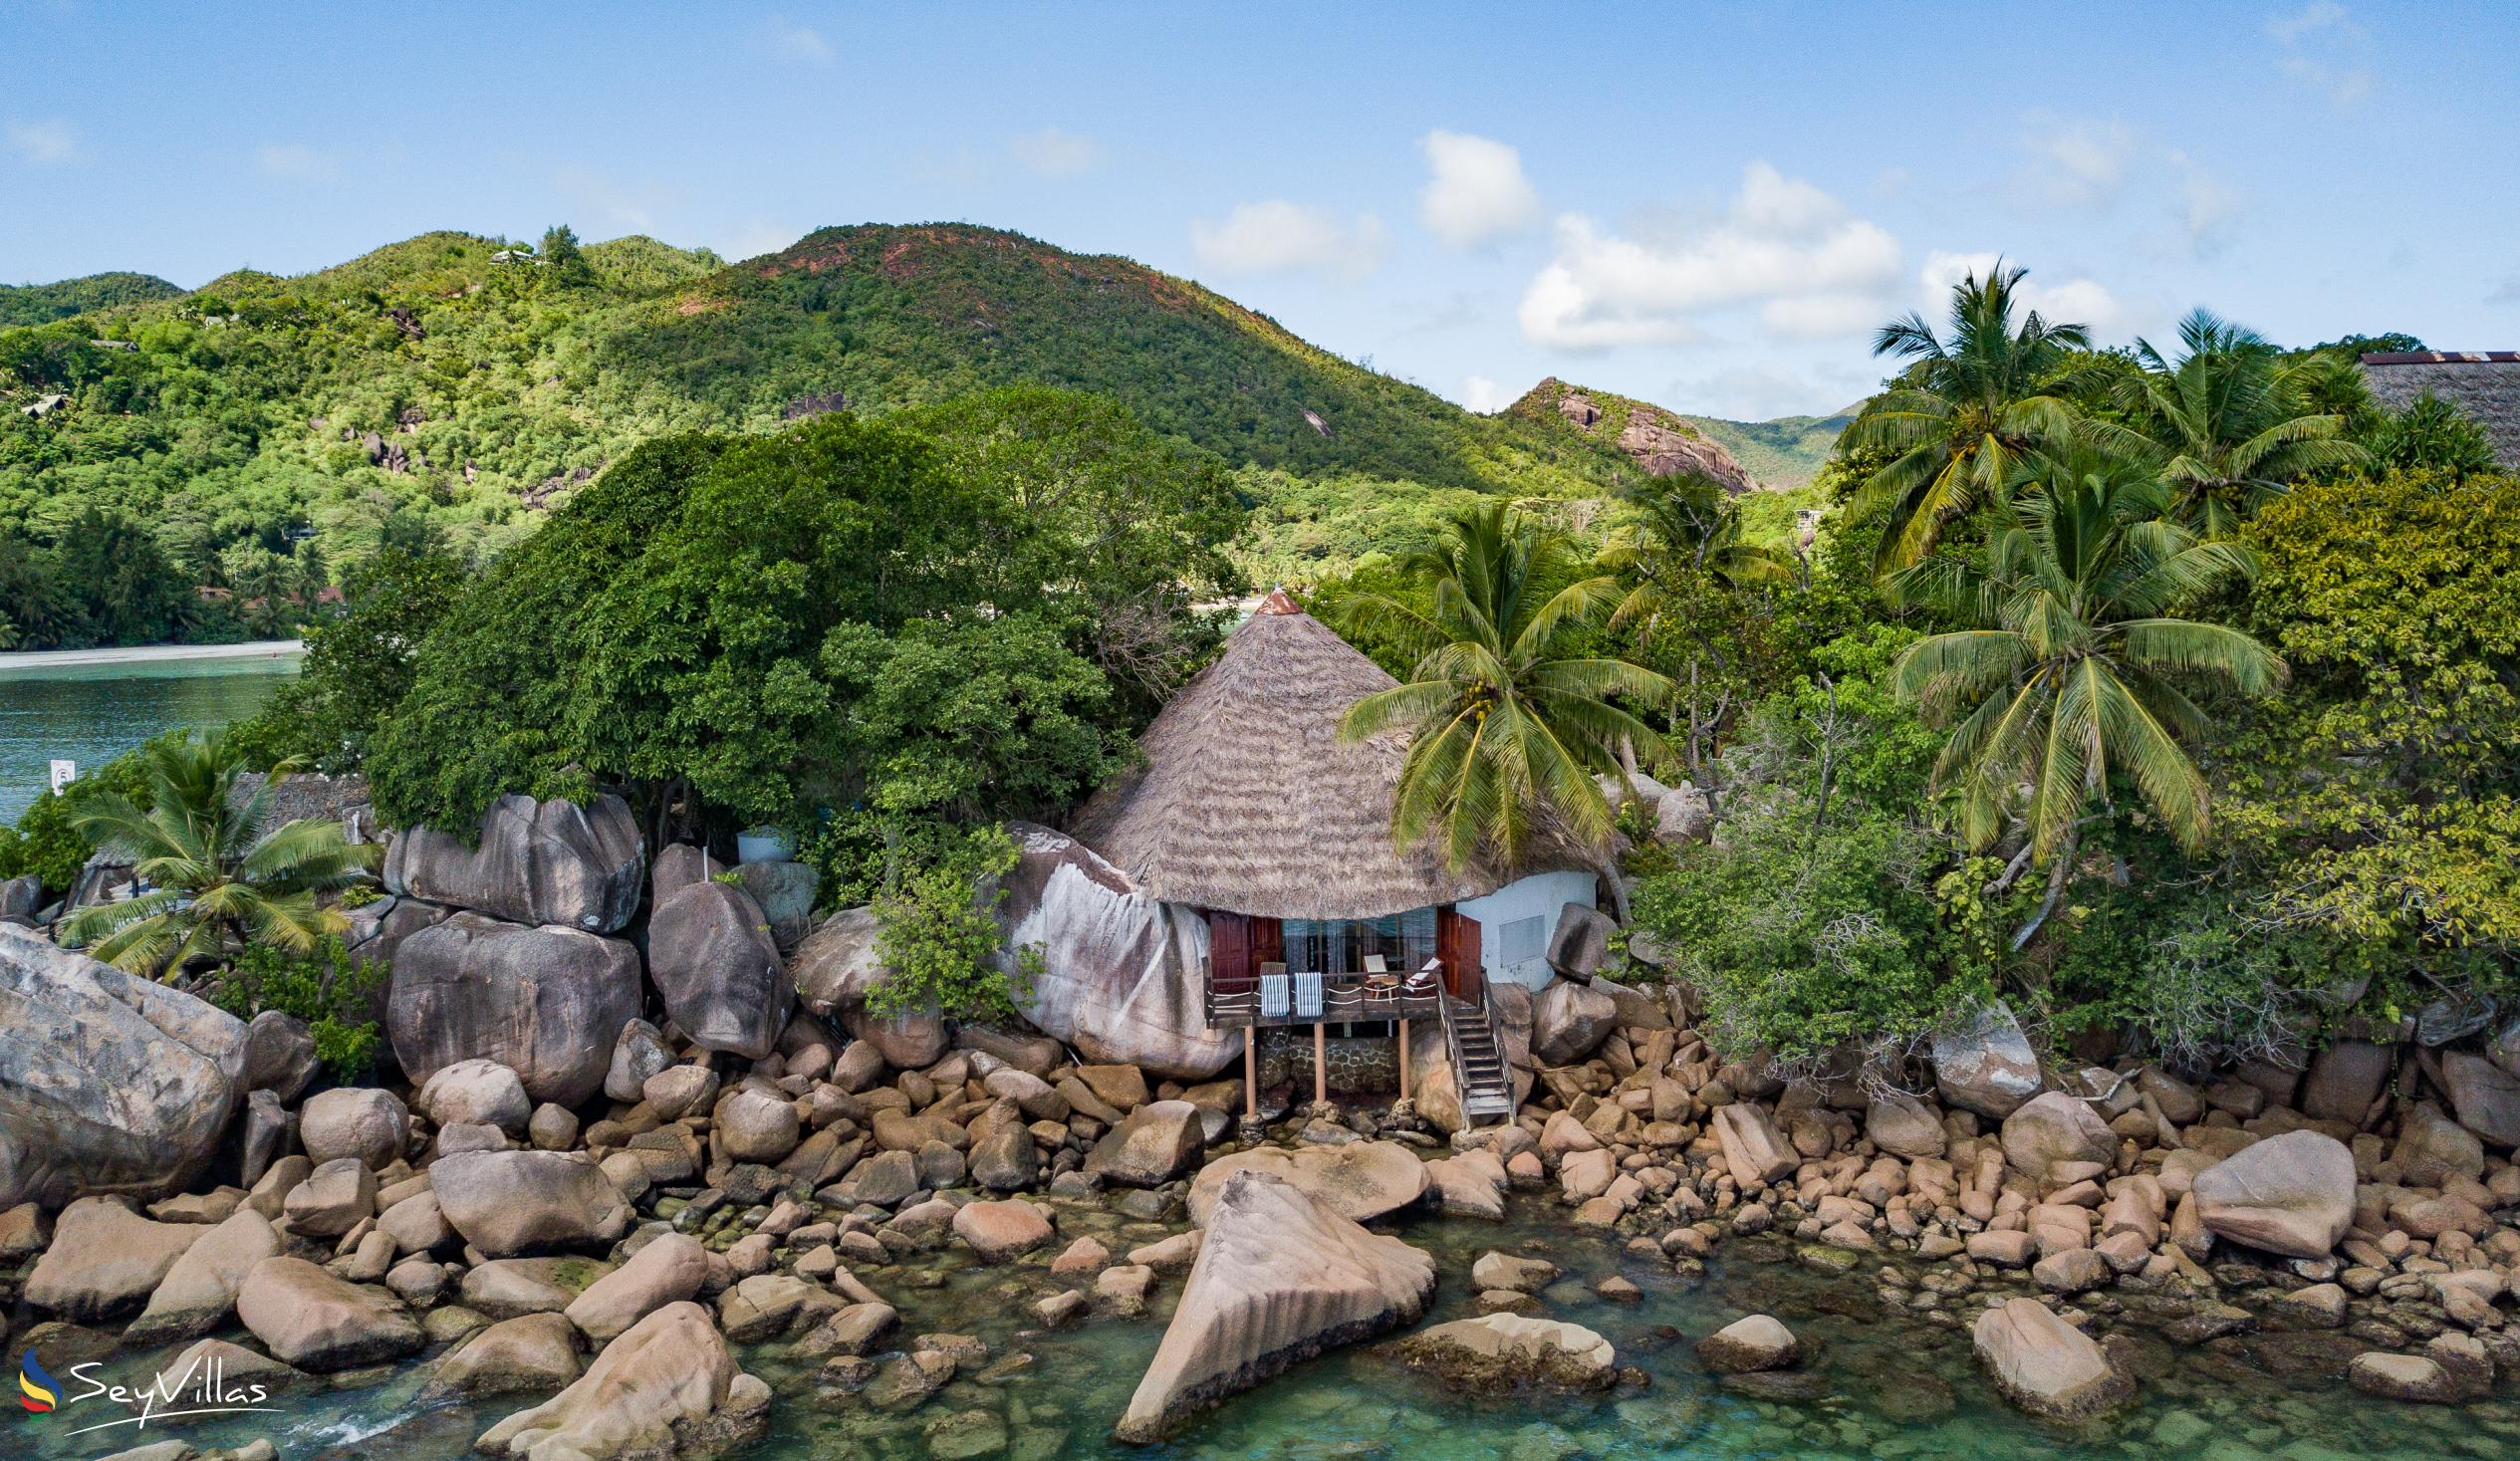 Photo 1: Chauve Souris Relais - Outdoor area - Praslin (Seychelles)